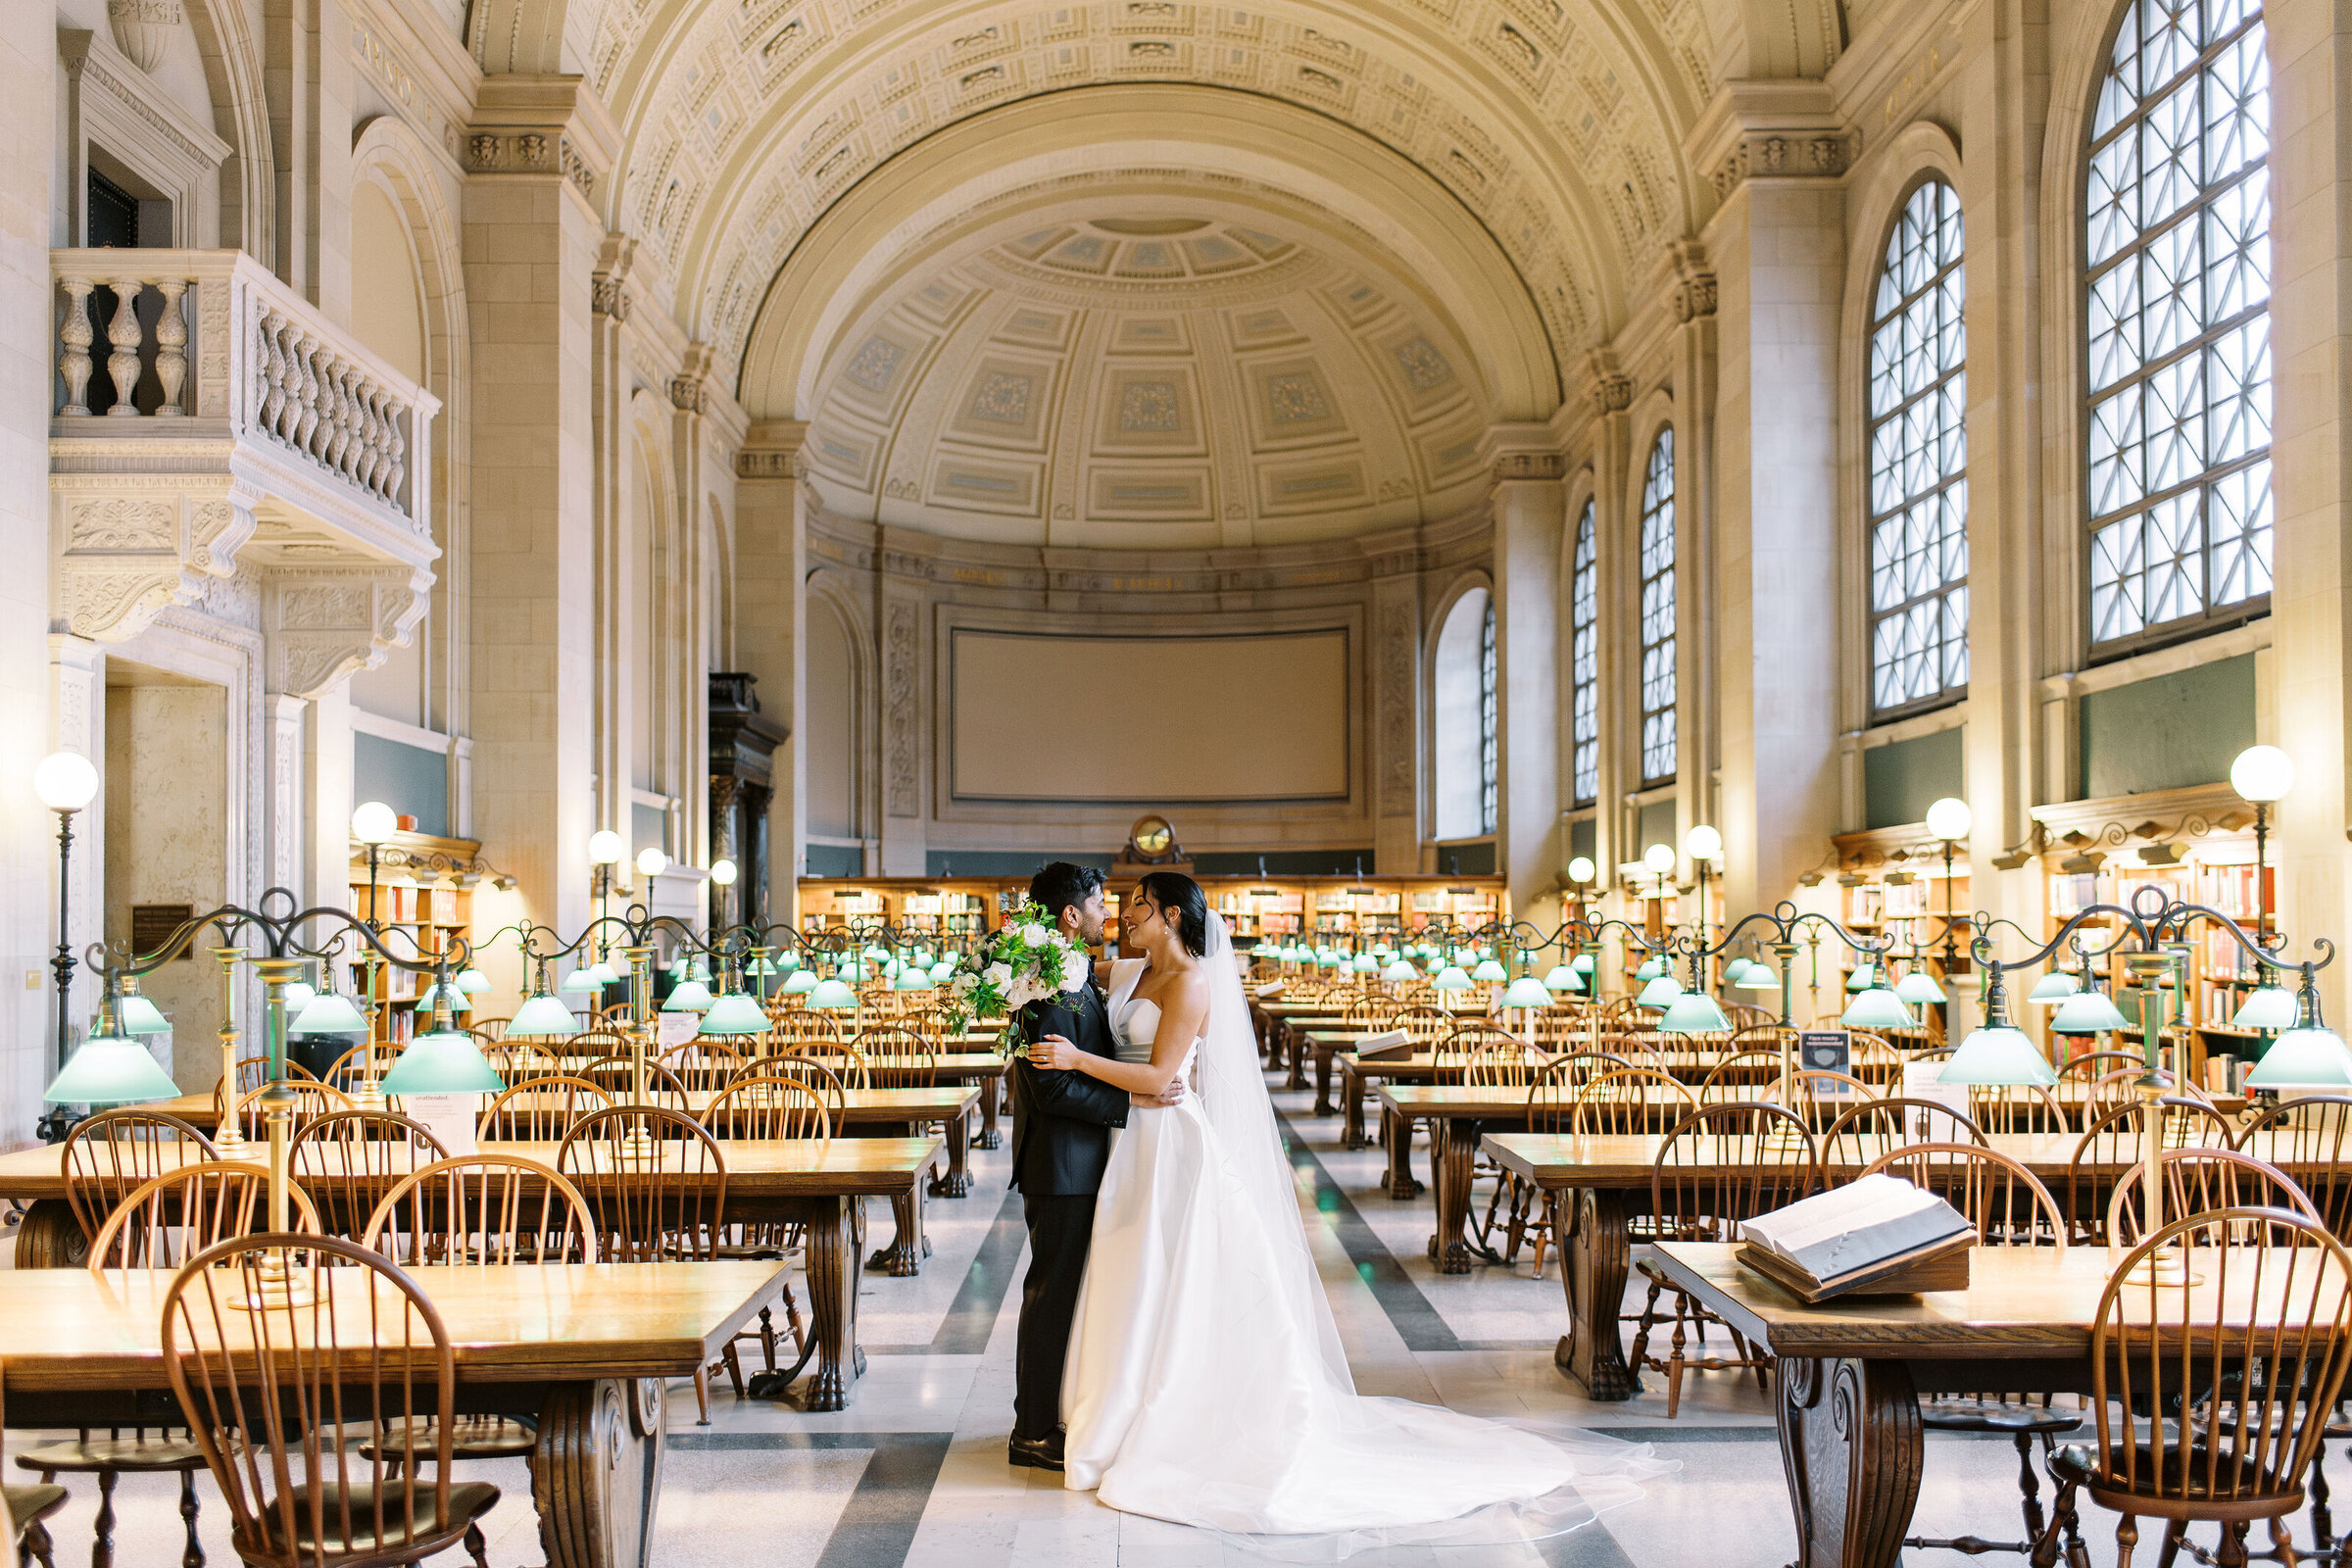 Bostonw edding photographer captures couple in the public library